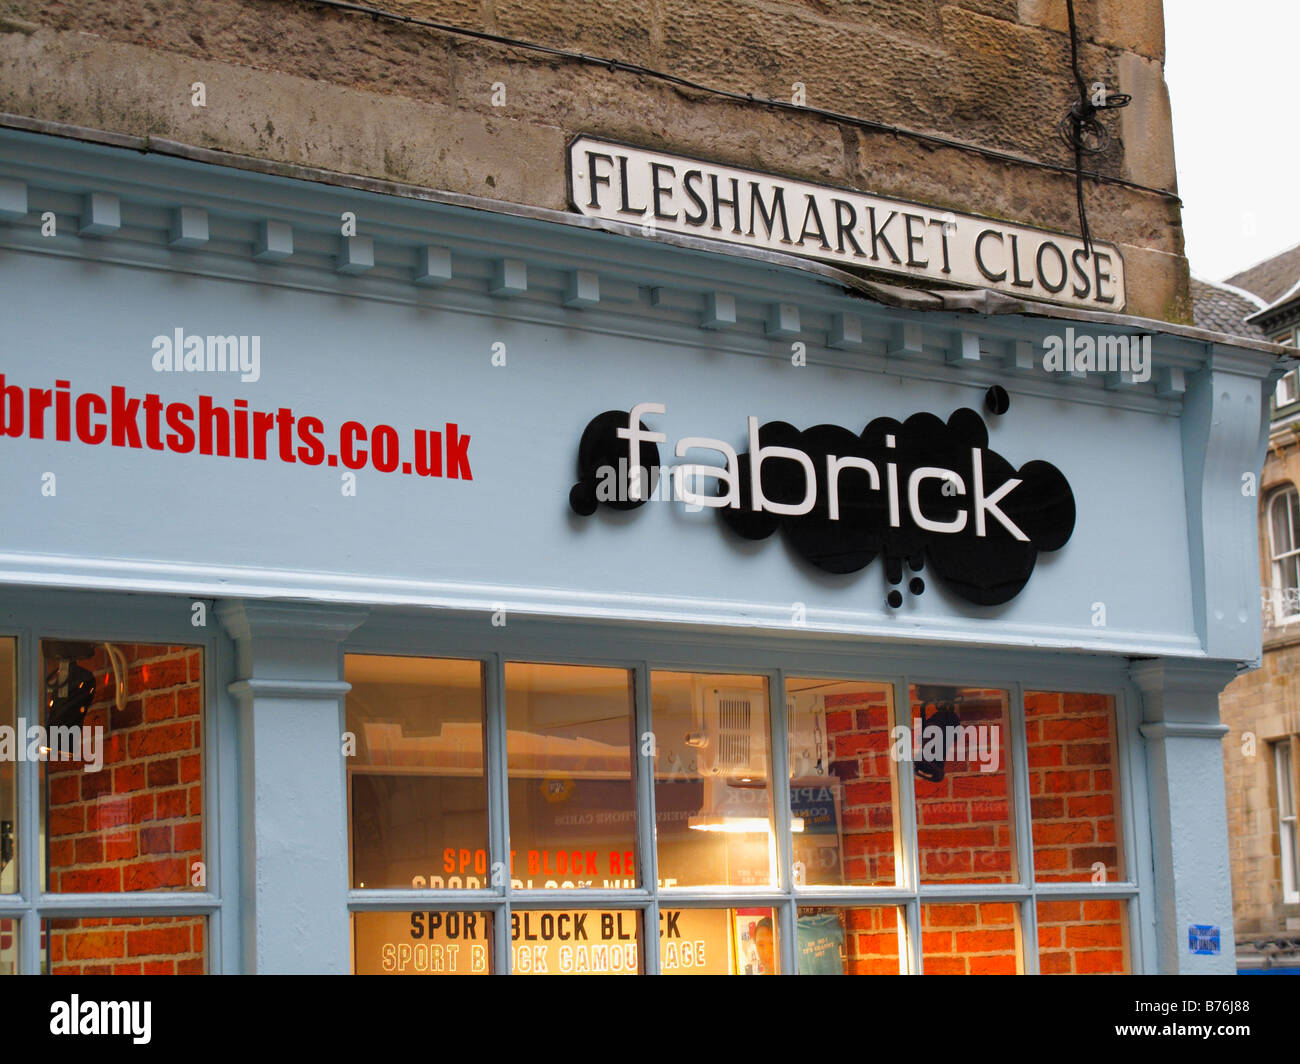 A street sign for Fleshmarket Close in old town Edinburgh Scotland Stock Photo